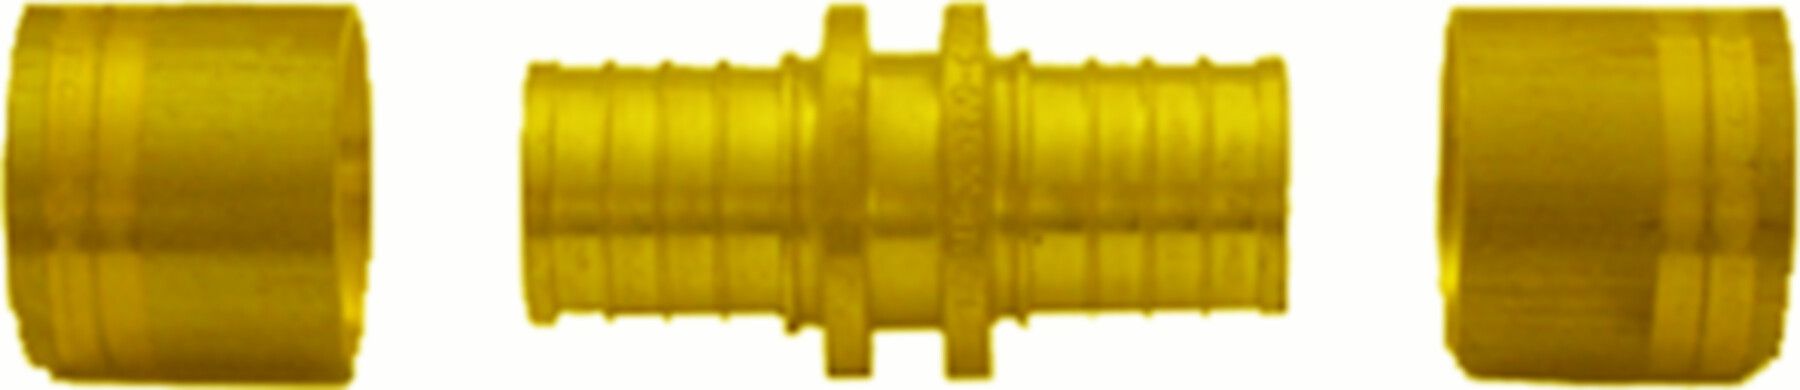 Press-Verbindungskupplung PVK egal S - 20 ø 20/2.8 mm - Isopex Fernwärmeleitung